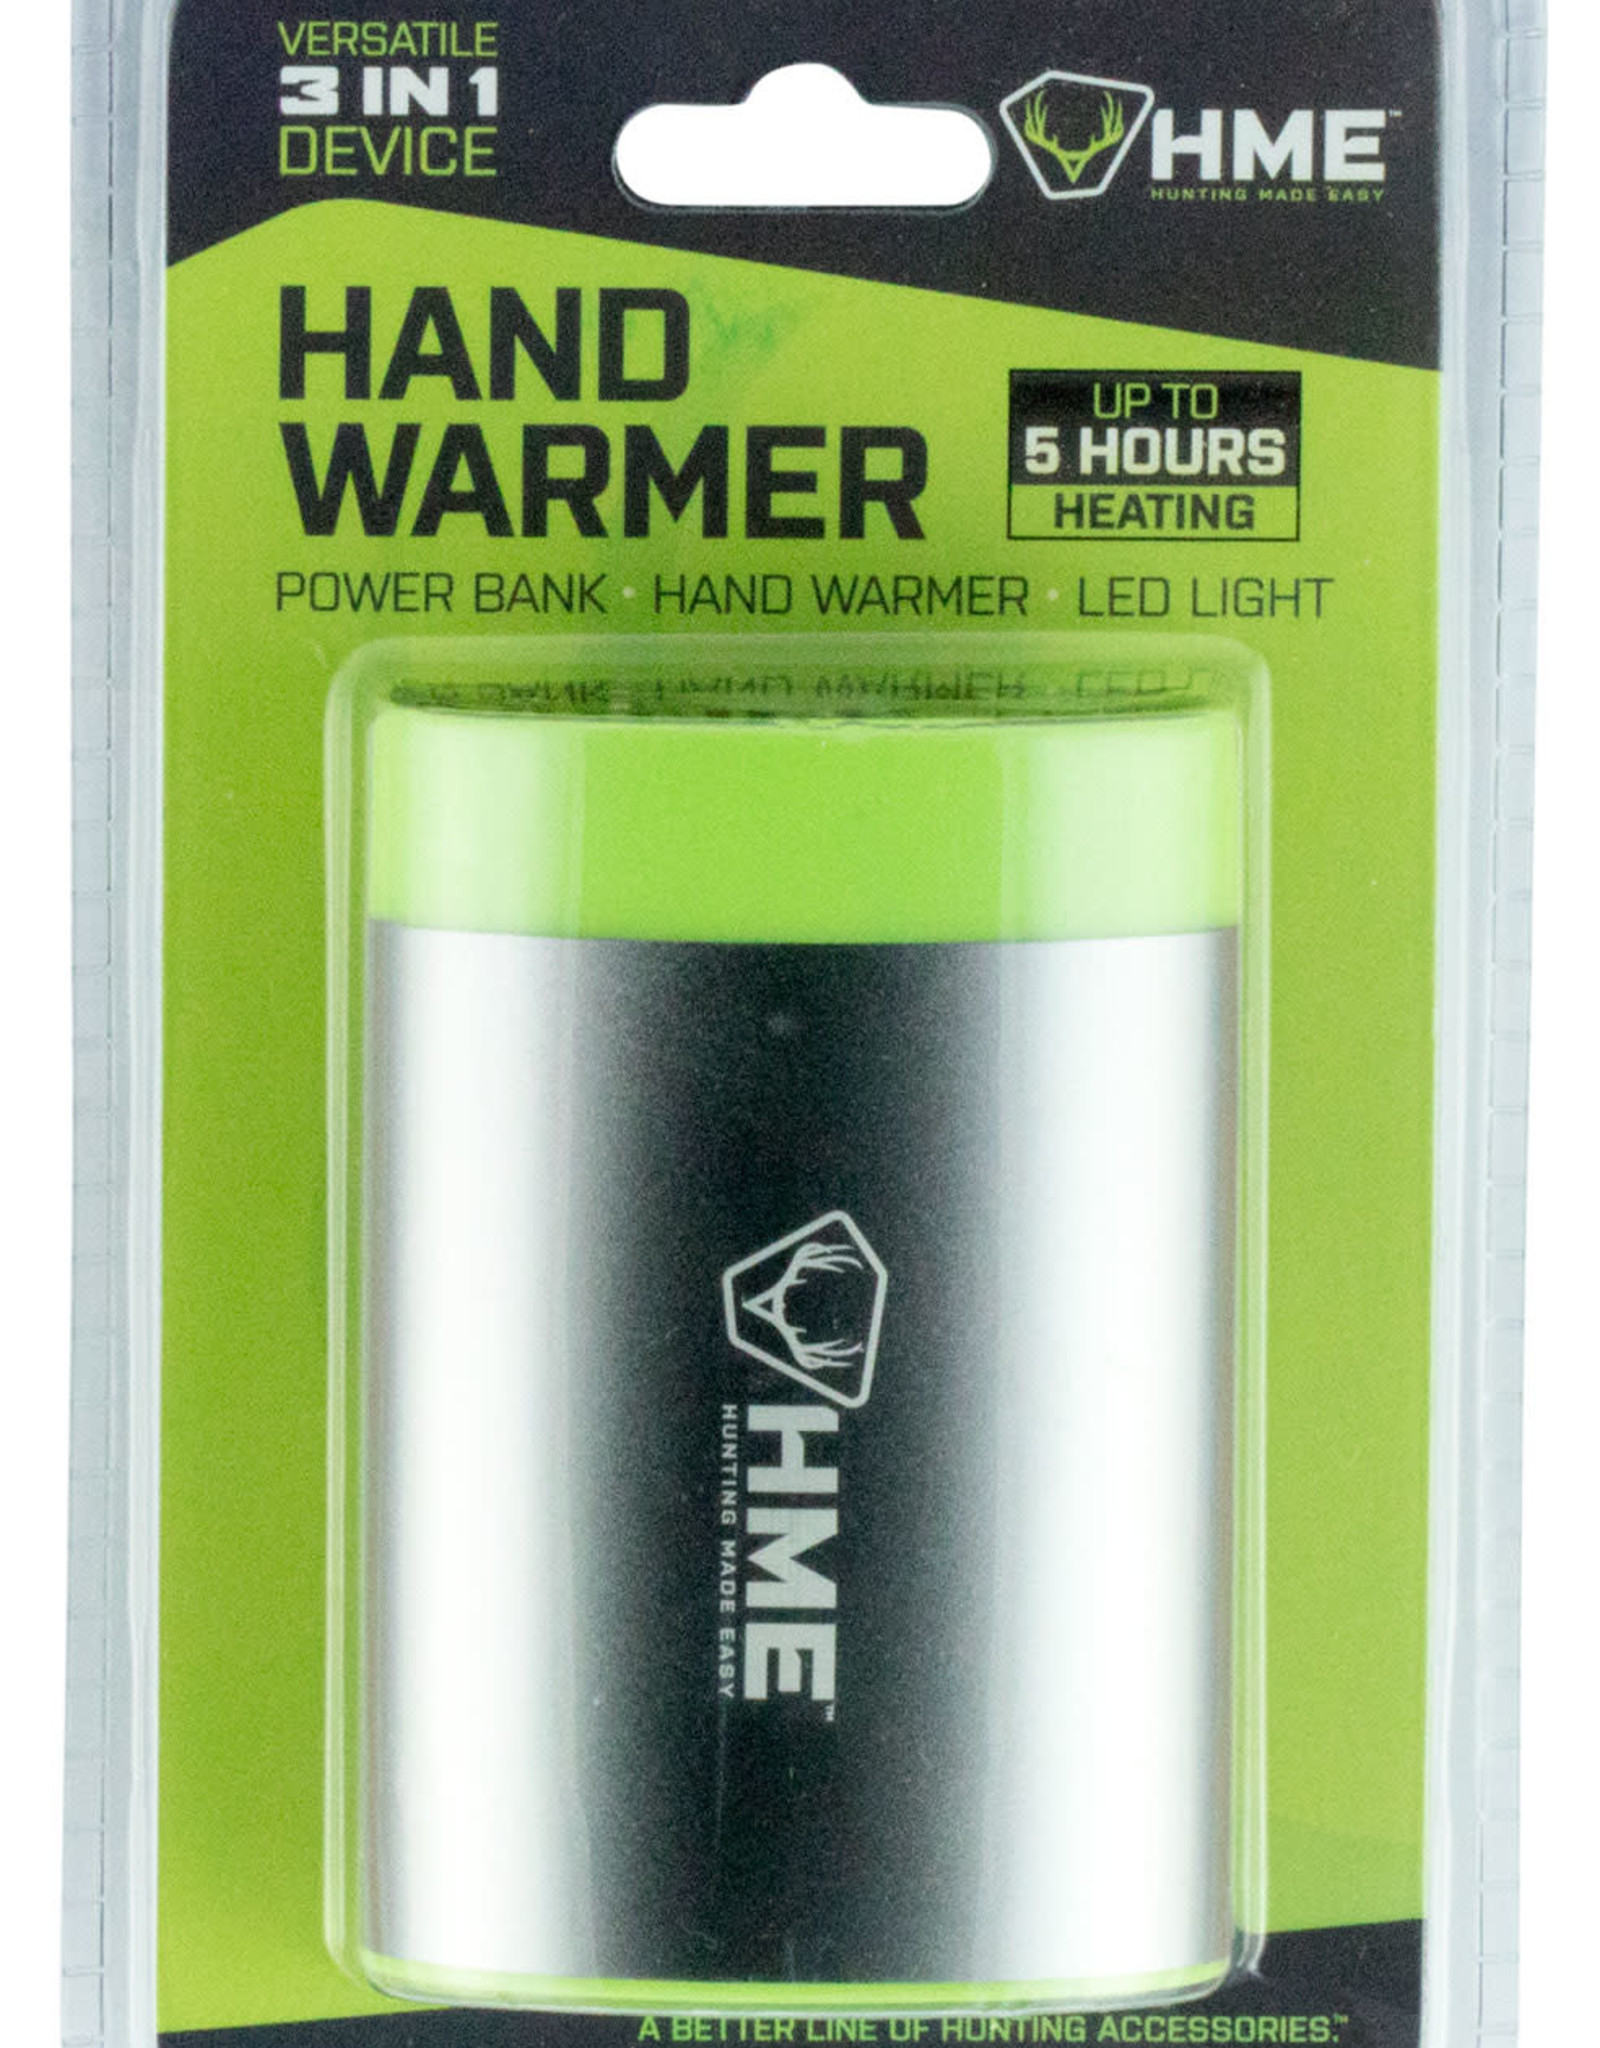 HME Hand Warmer Versatile 3 in 1 Device